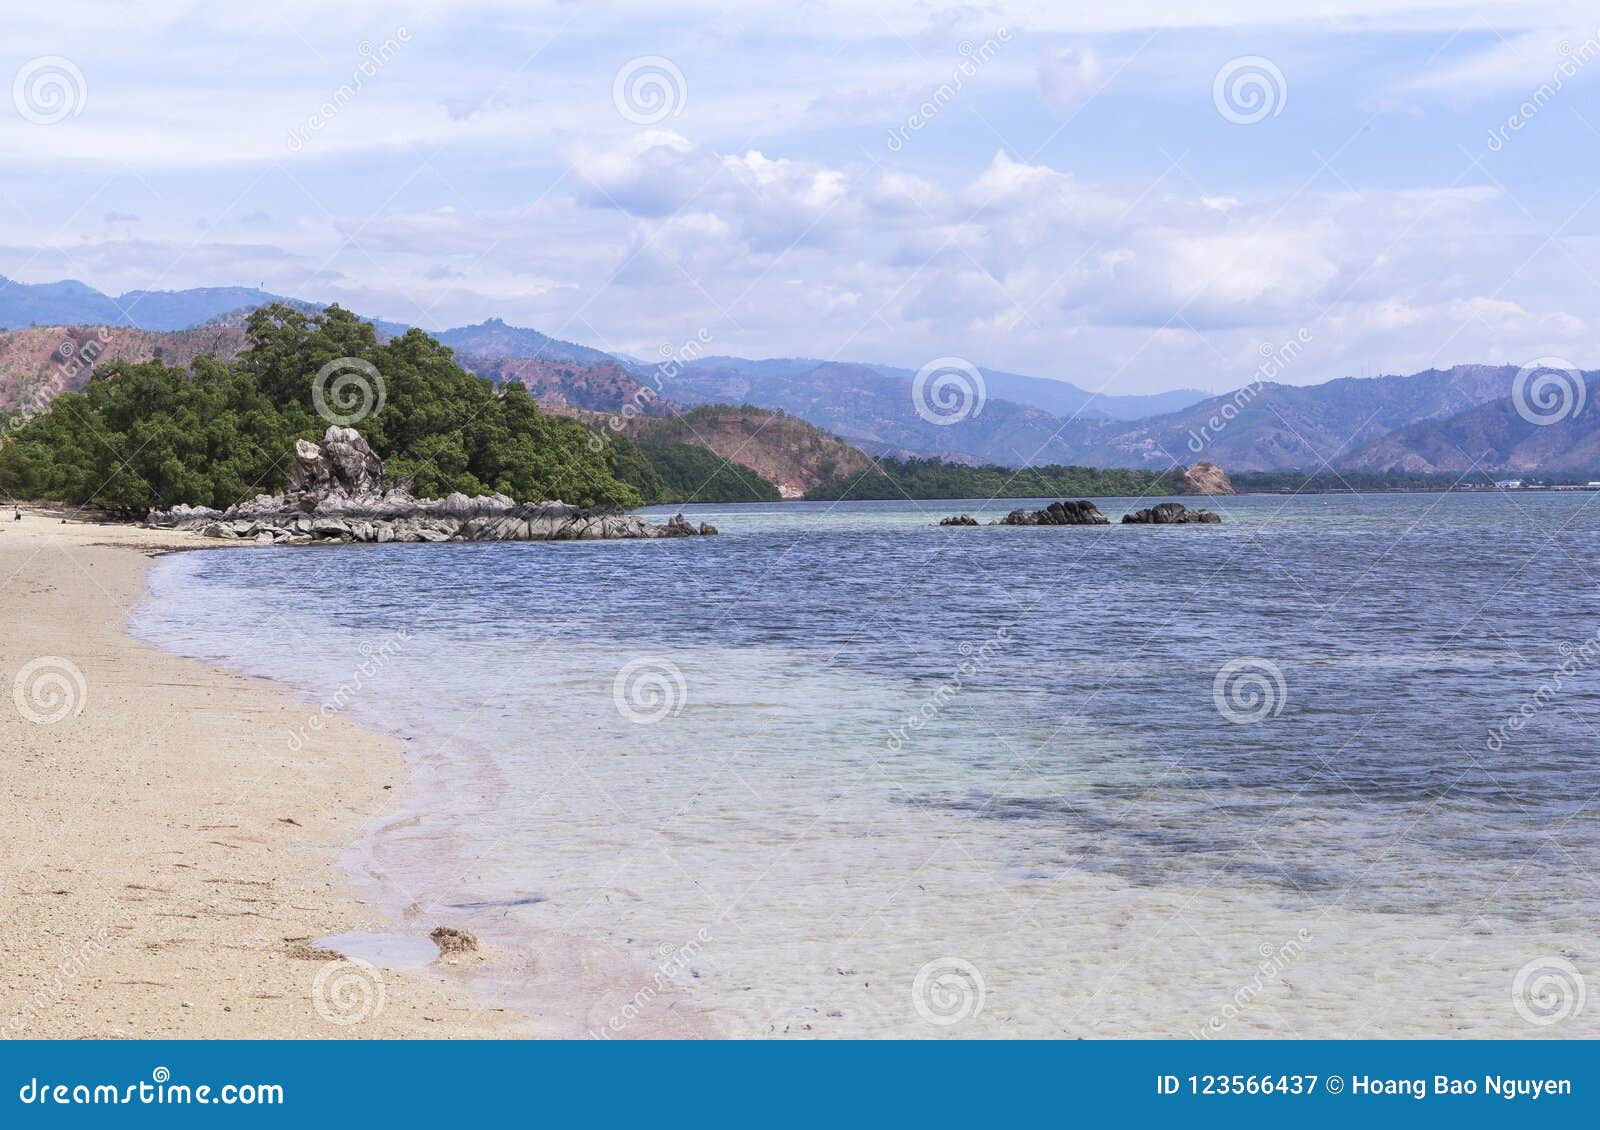 the beautiful beach in timor leste